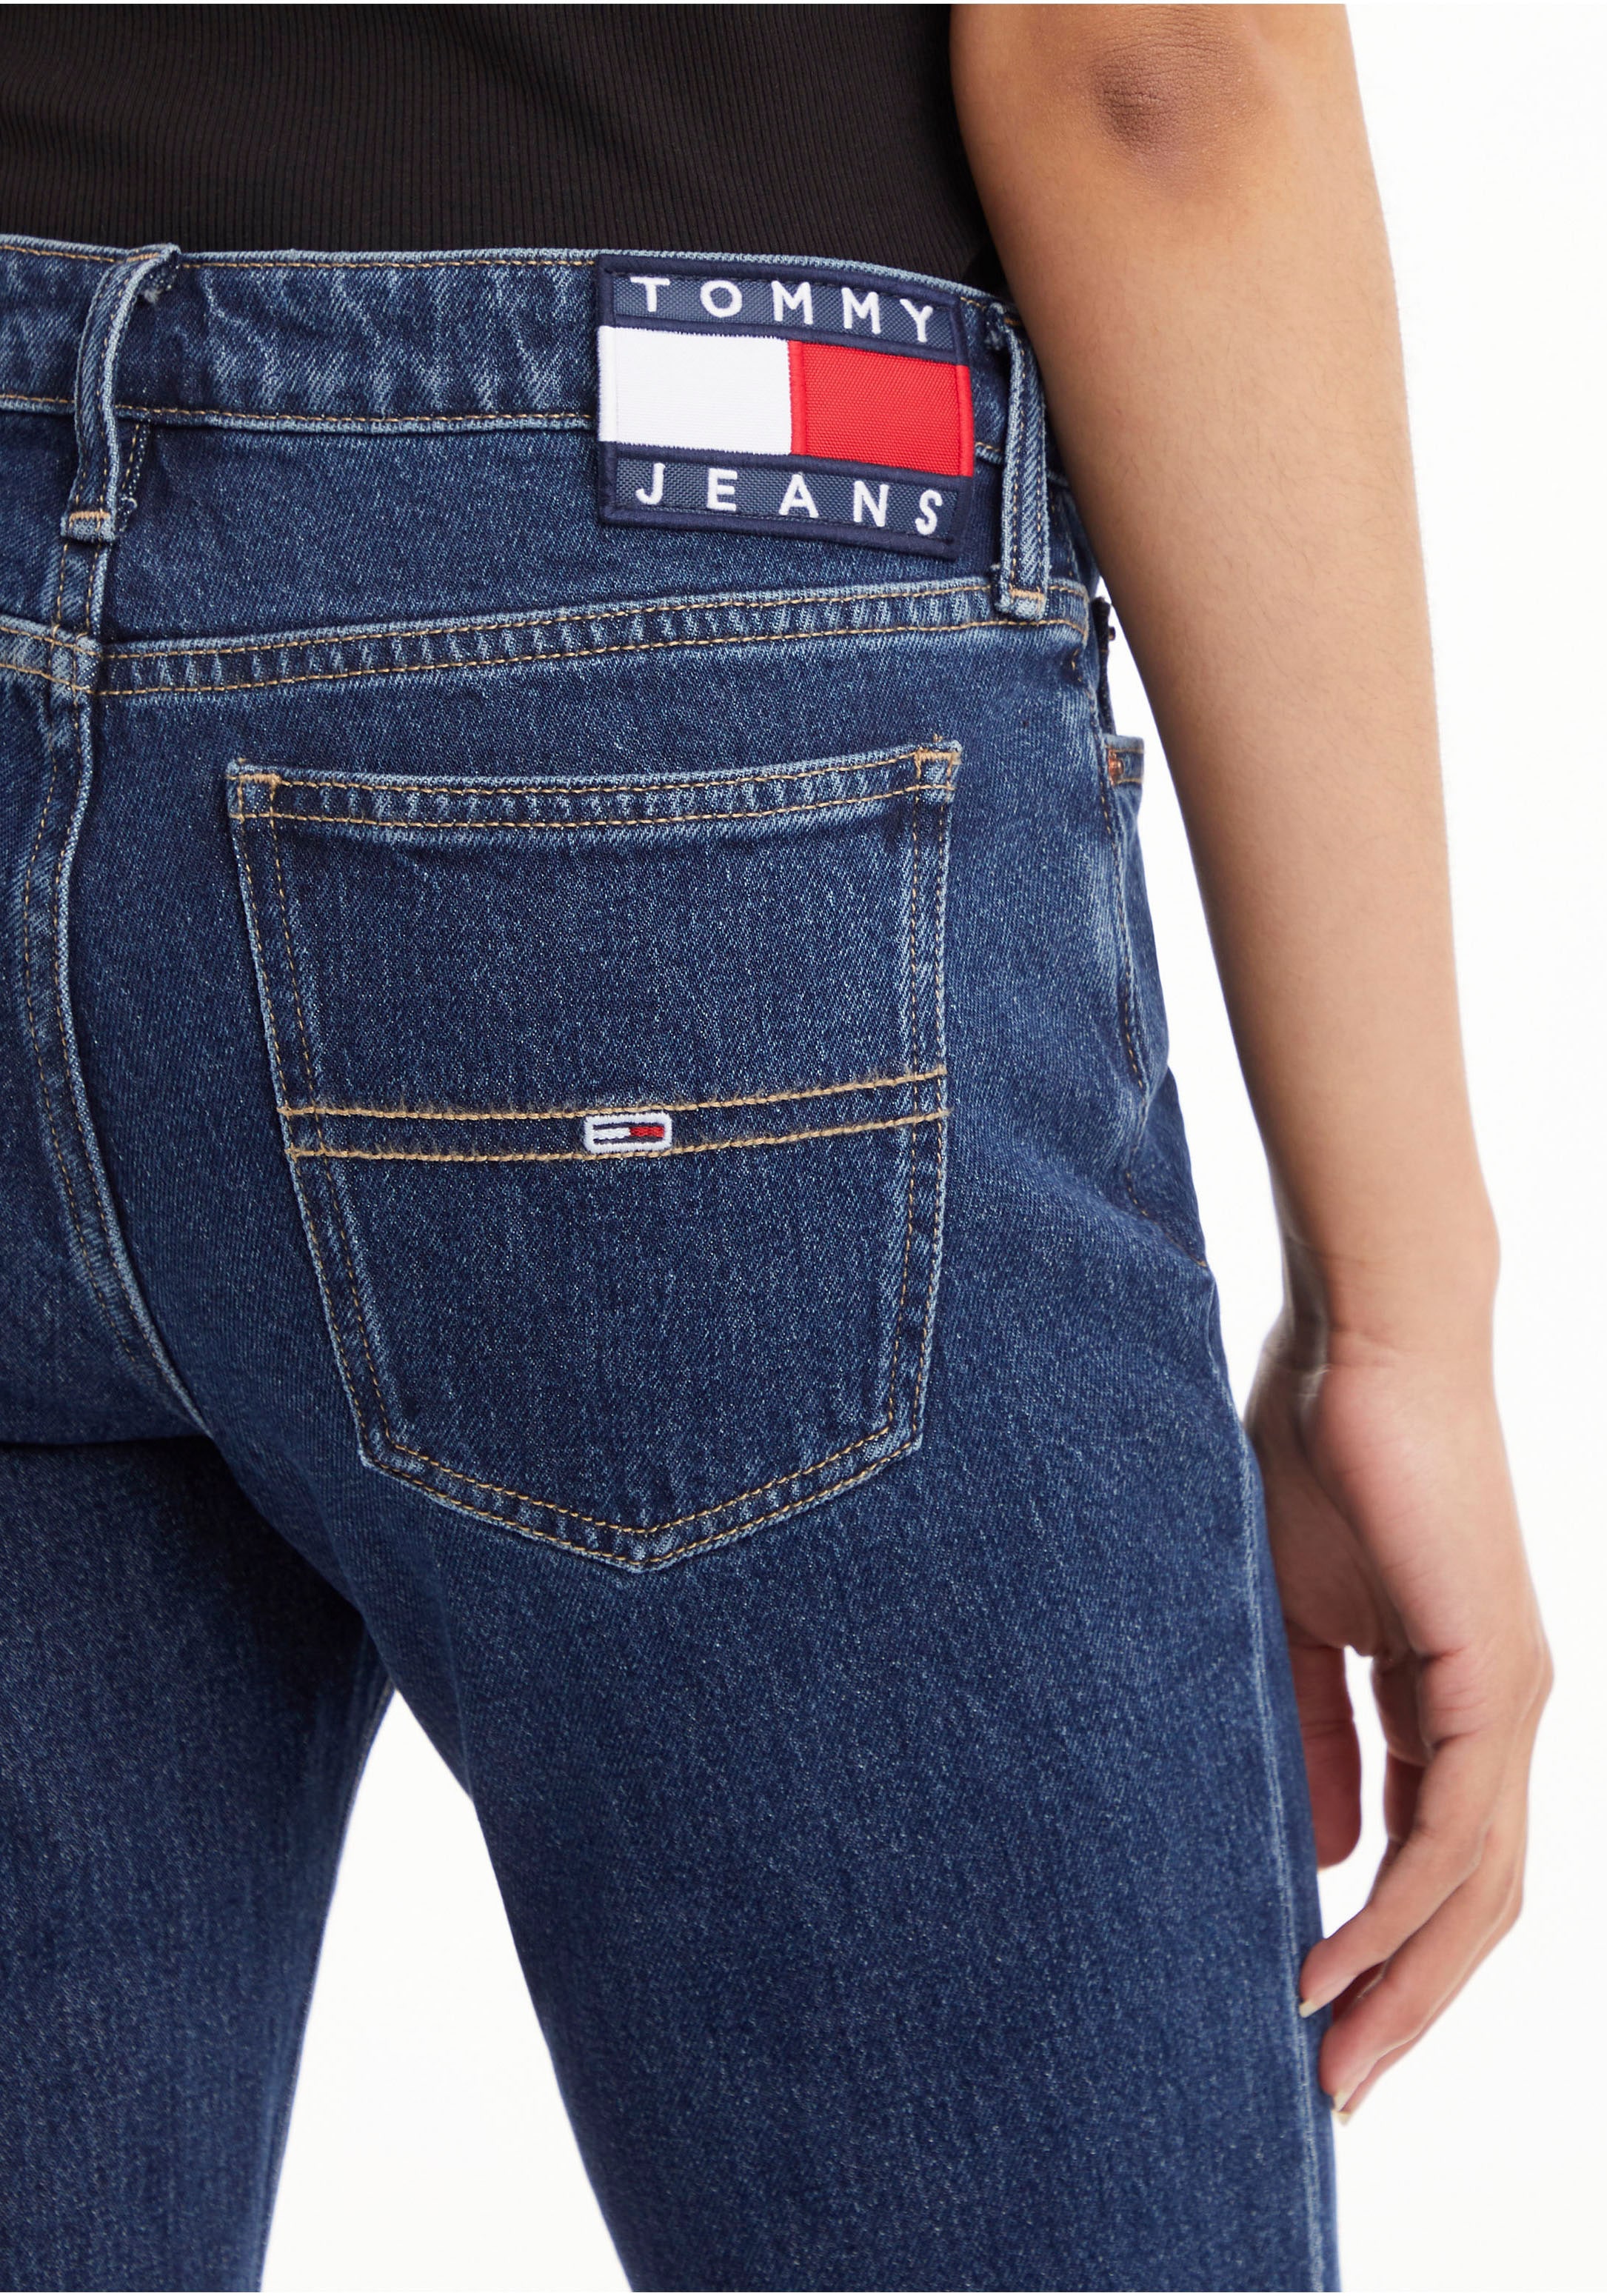 Tommy Jeans Schlagjeans, mit Tommy Bund bei Logo-Badge OTTOversand Jeans am